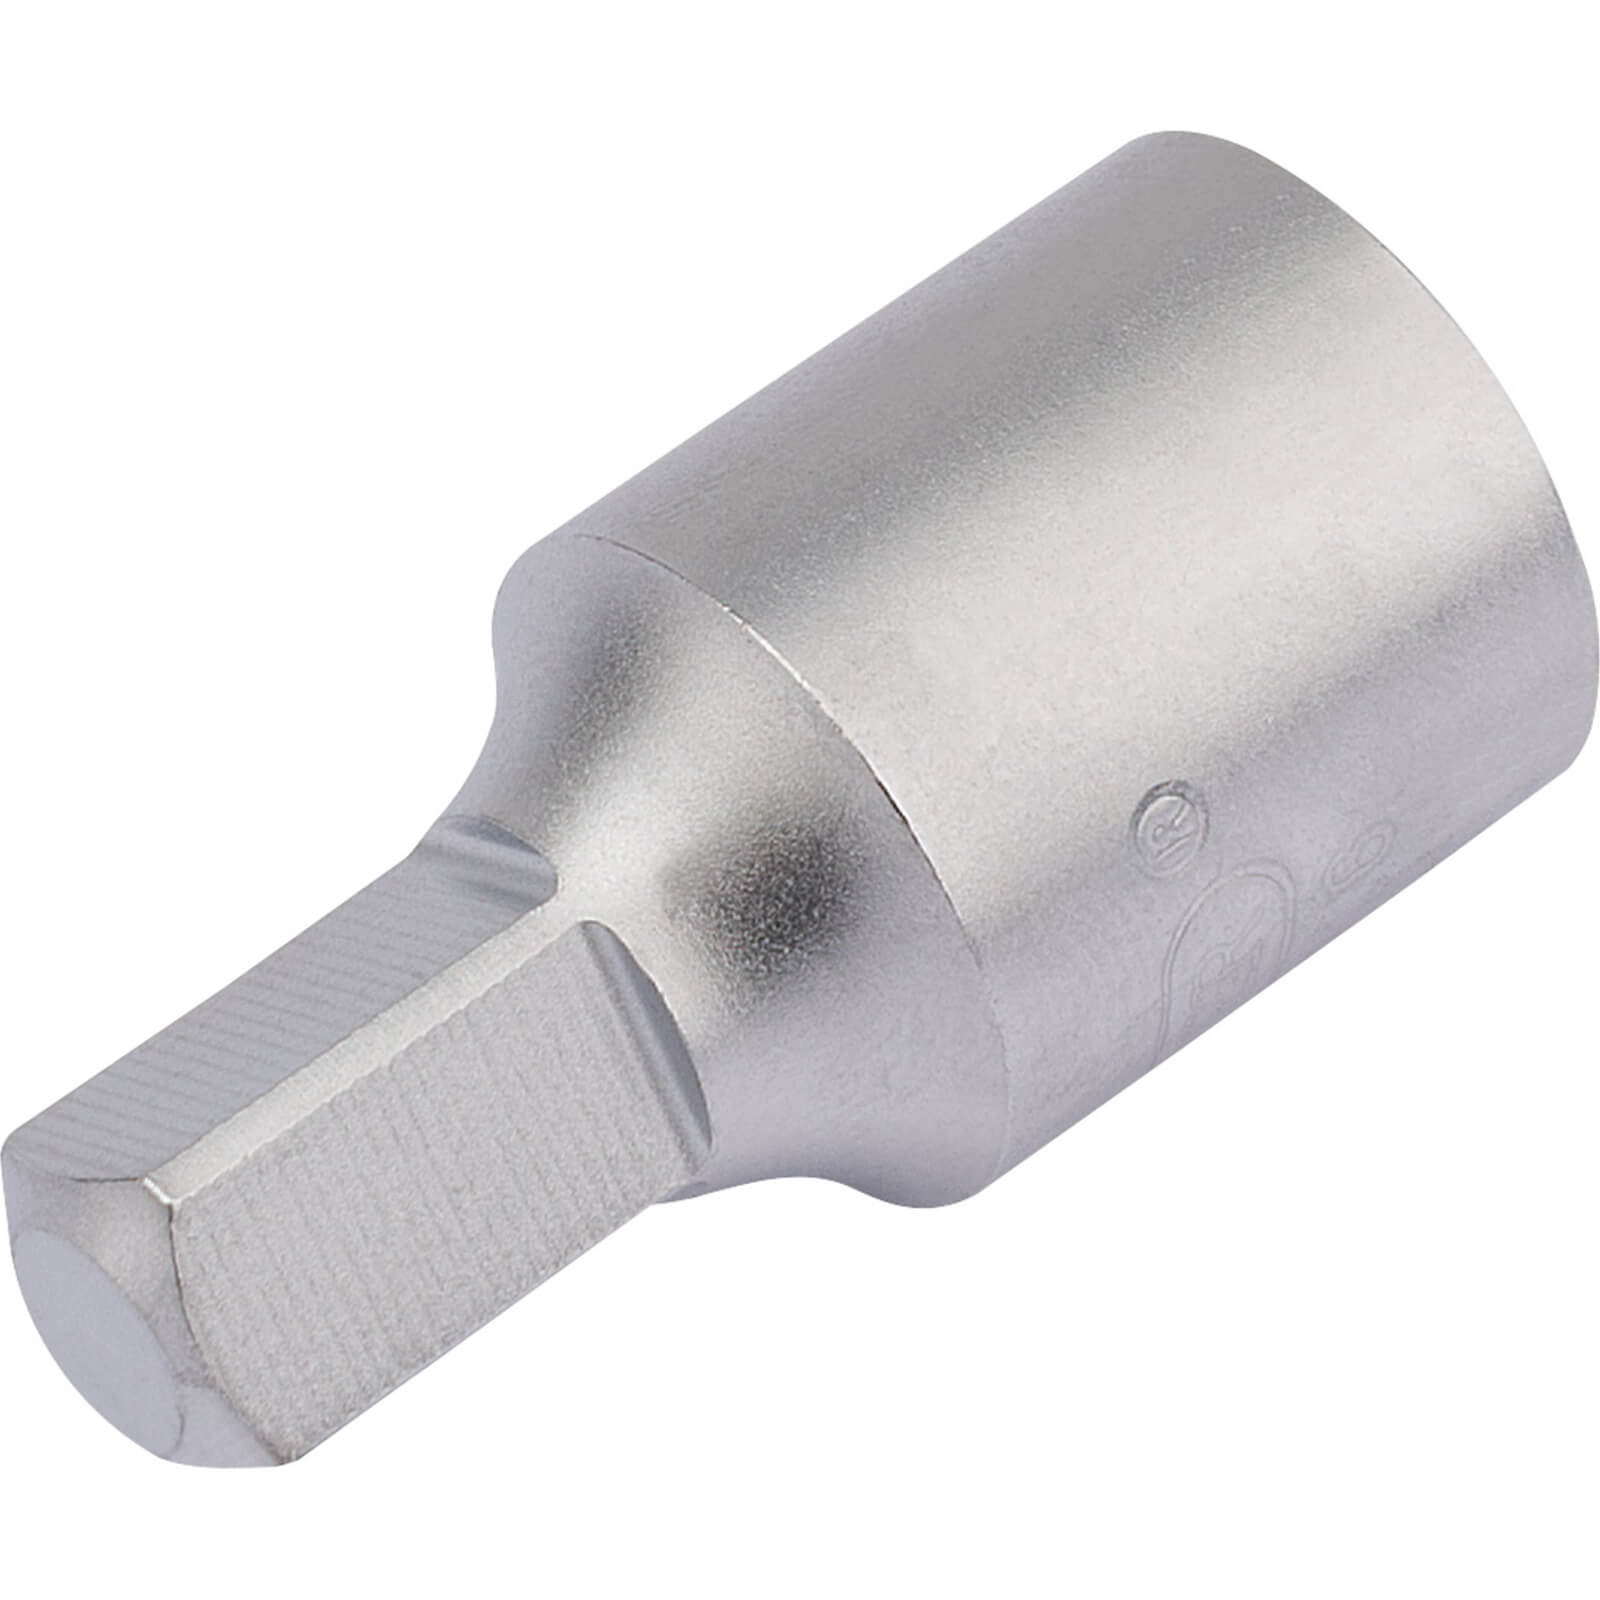 Image of Draper Metric Drain Plug Key 3/8" 8mm